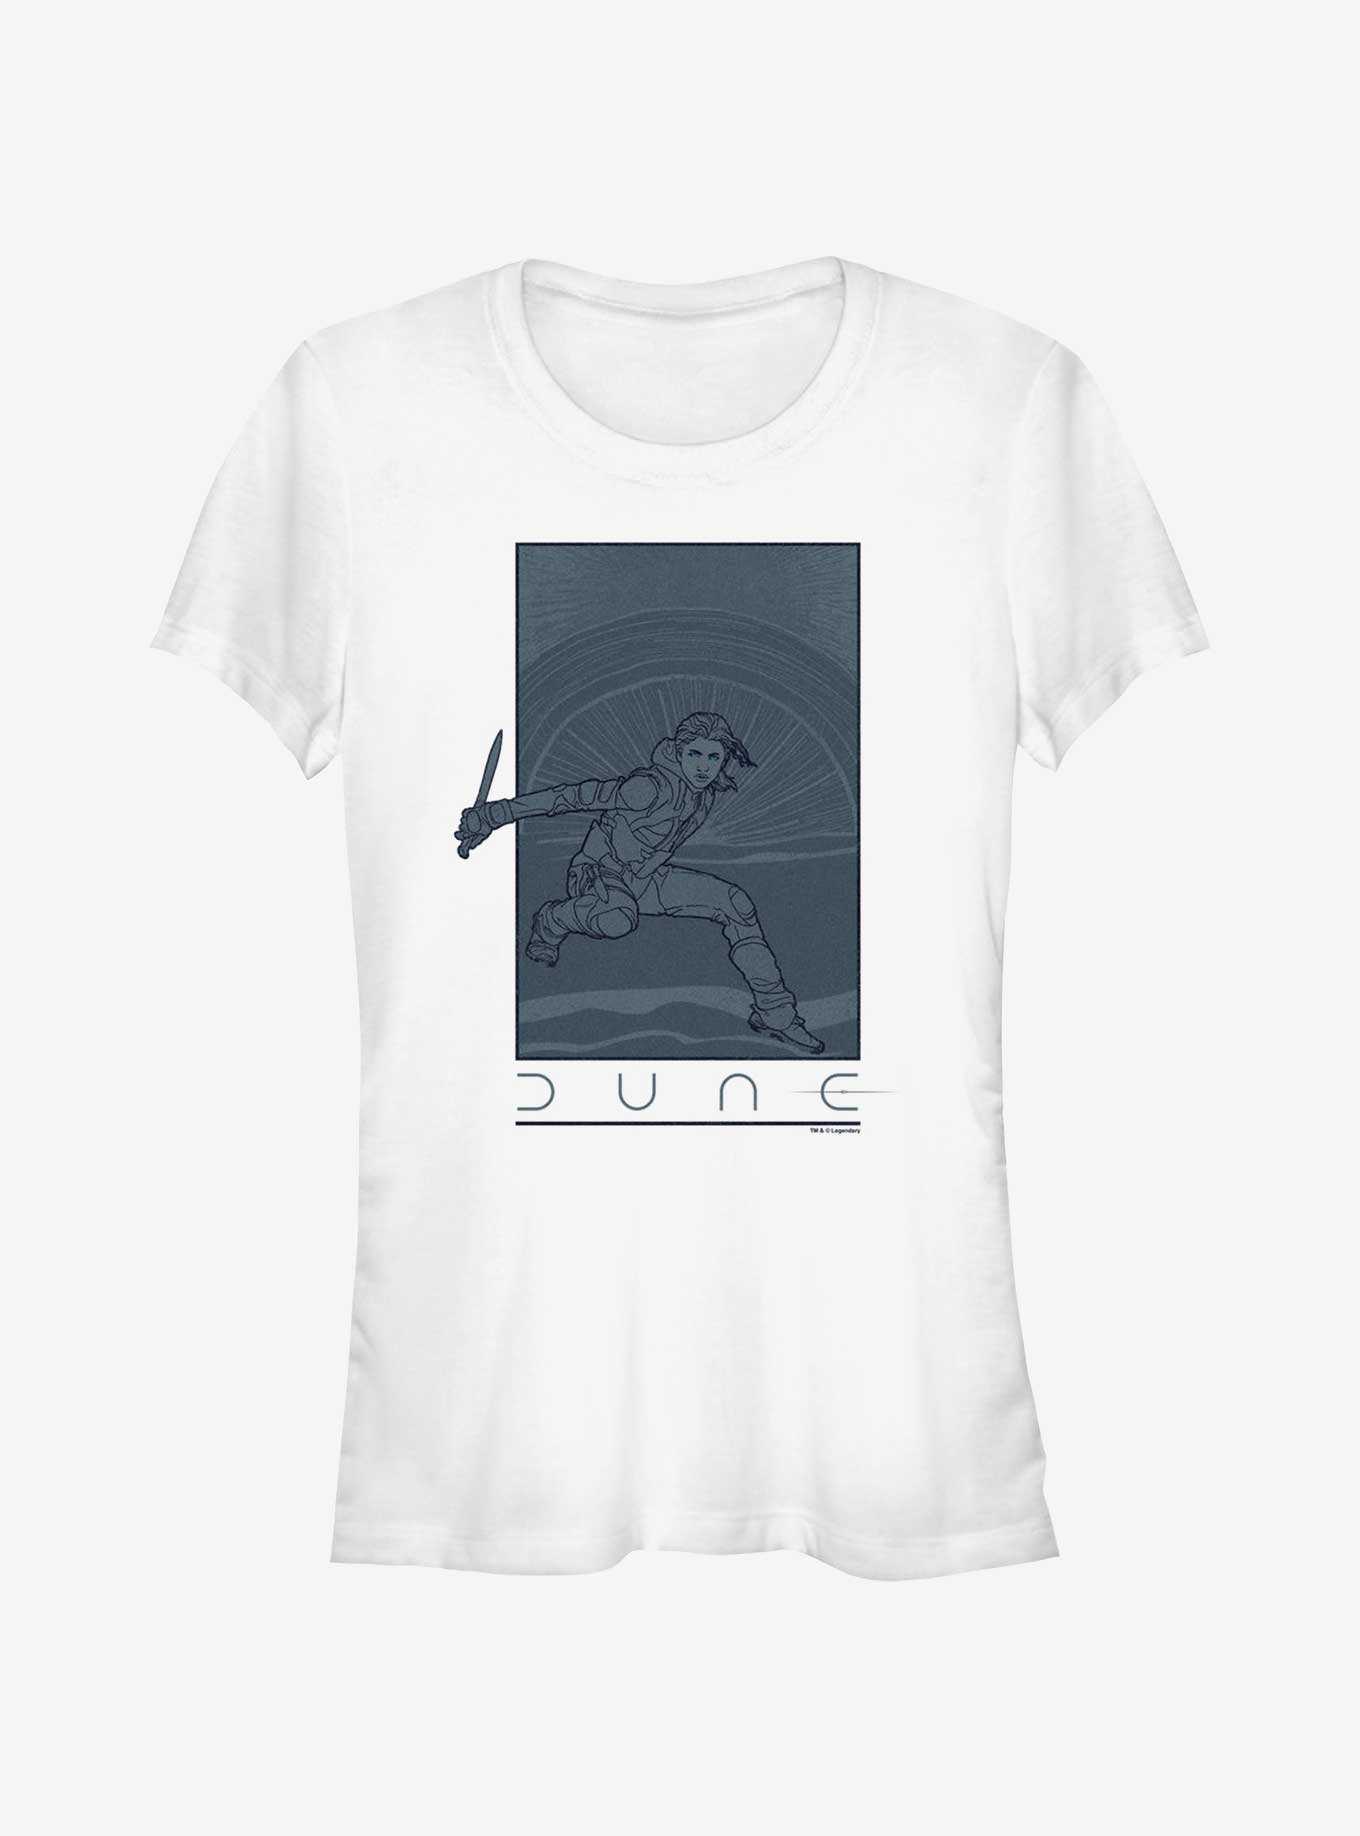 Dune: Part Two Chani Retro Illustration Girls T-Shirt, , hi-res